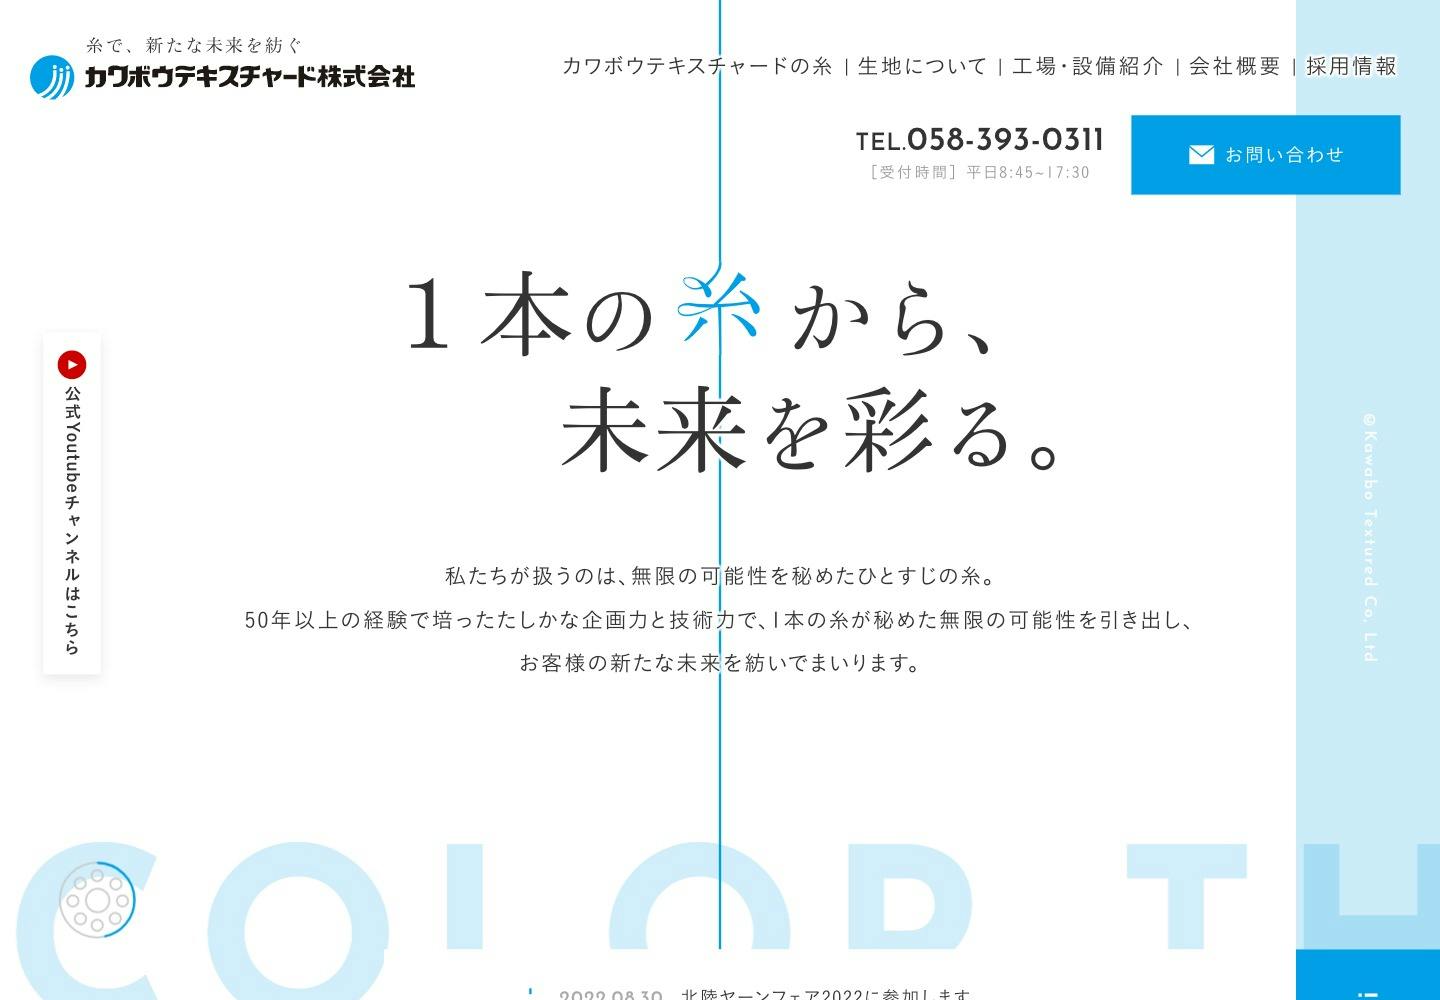 Cover Image for カワボウテキスチャード株式会社｜岐阜県のテキスタイルメーカー